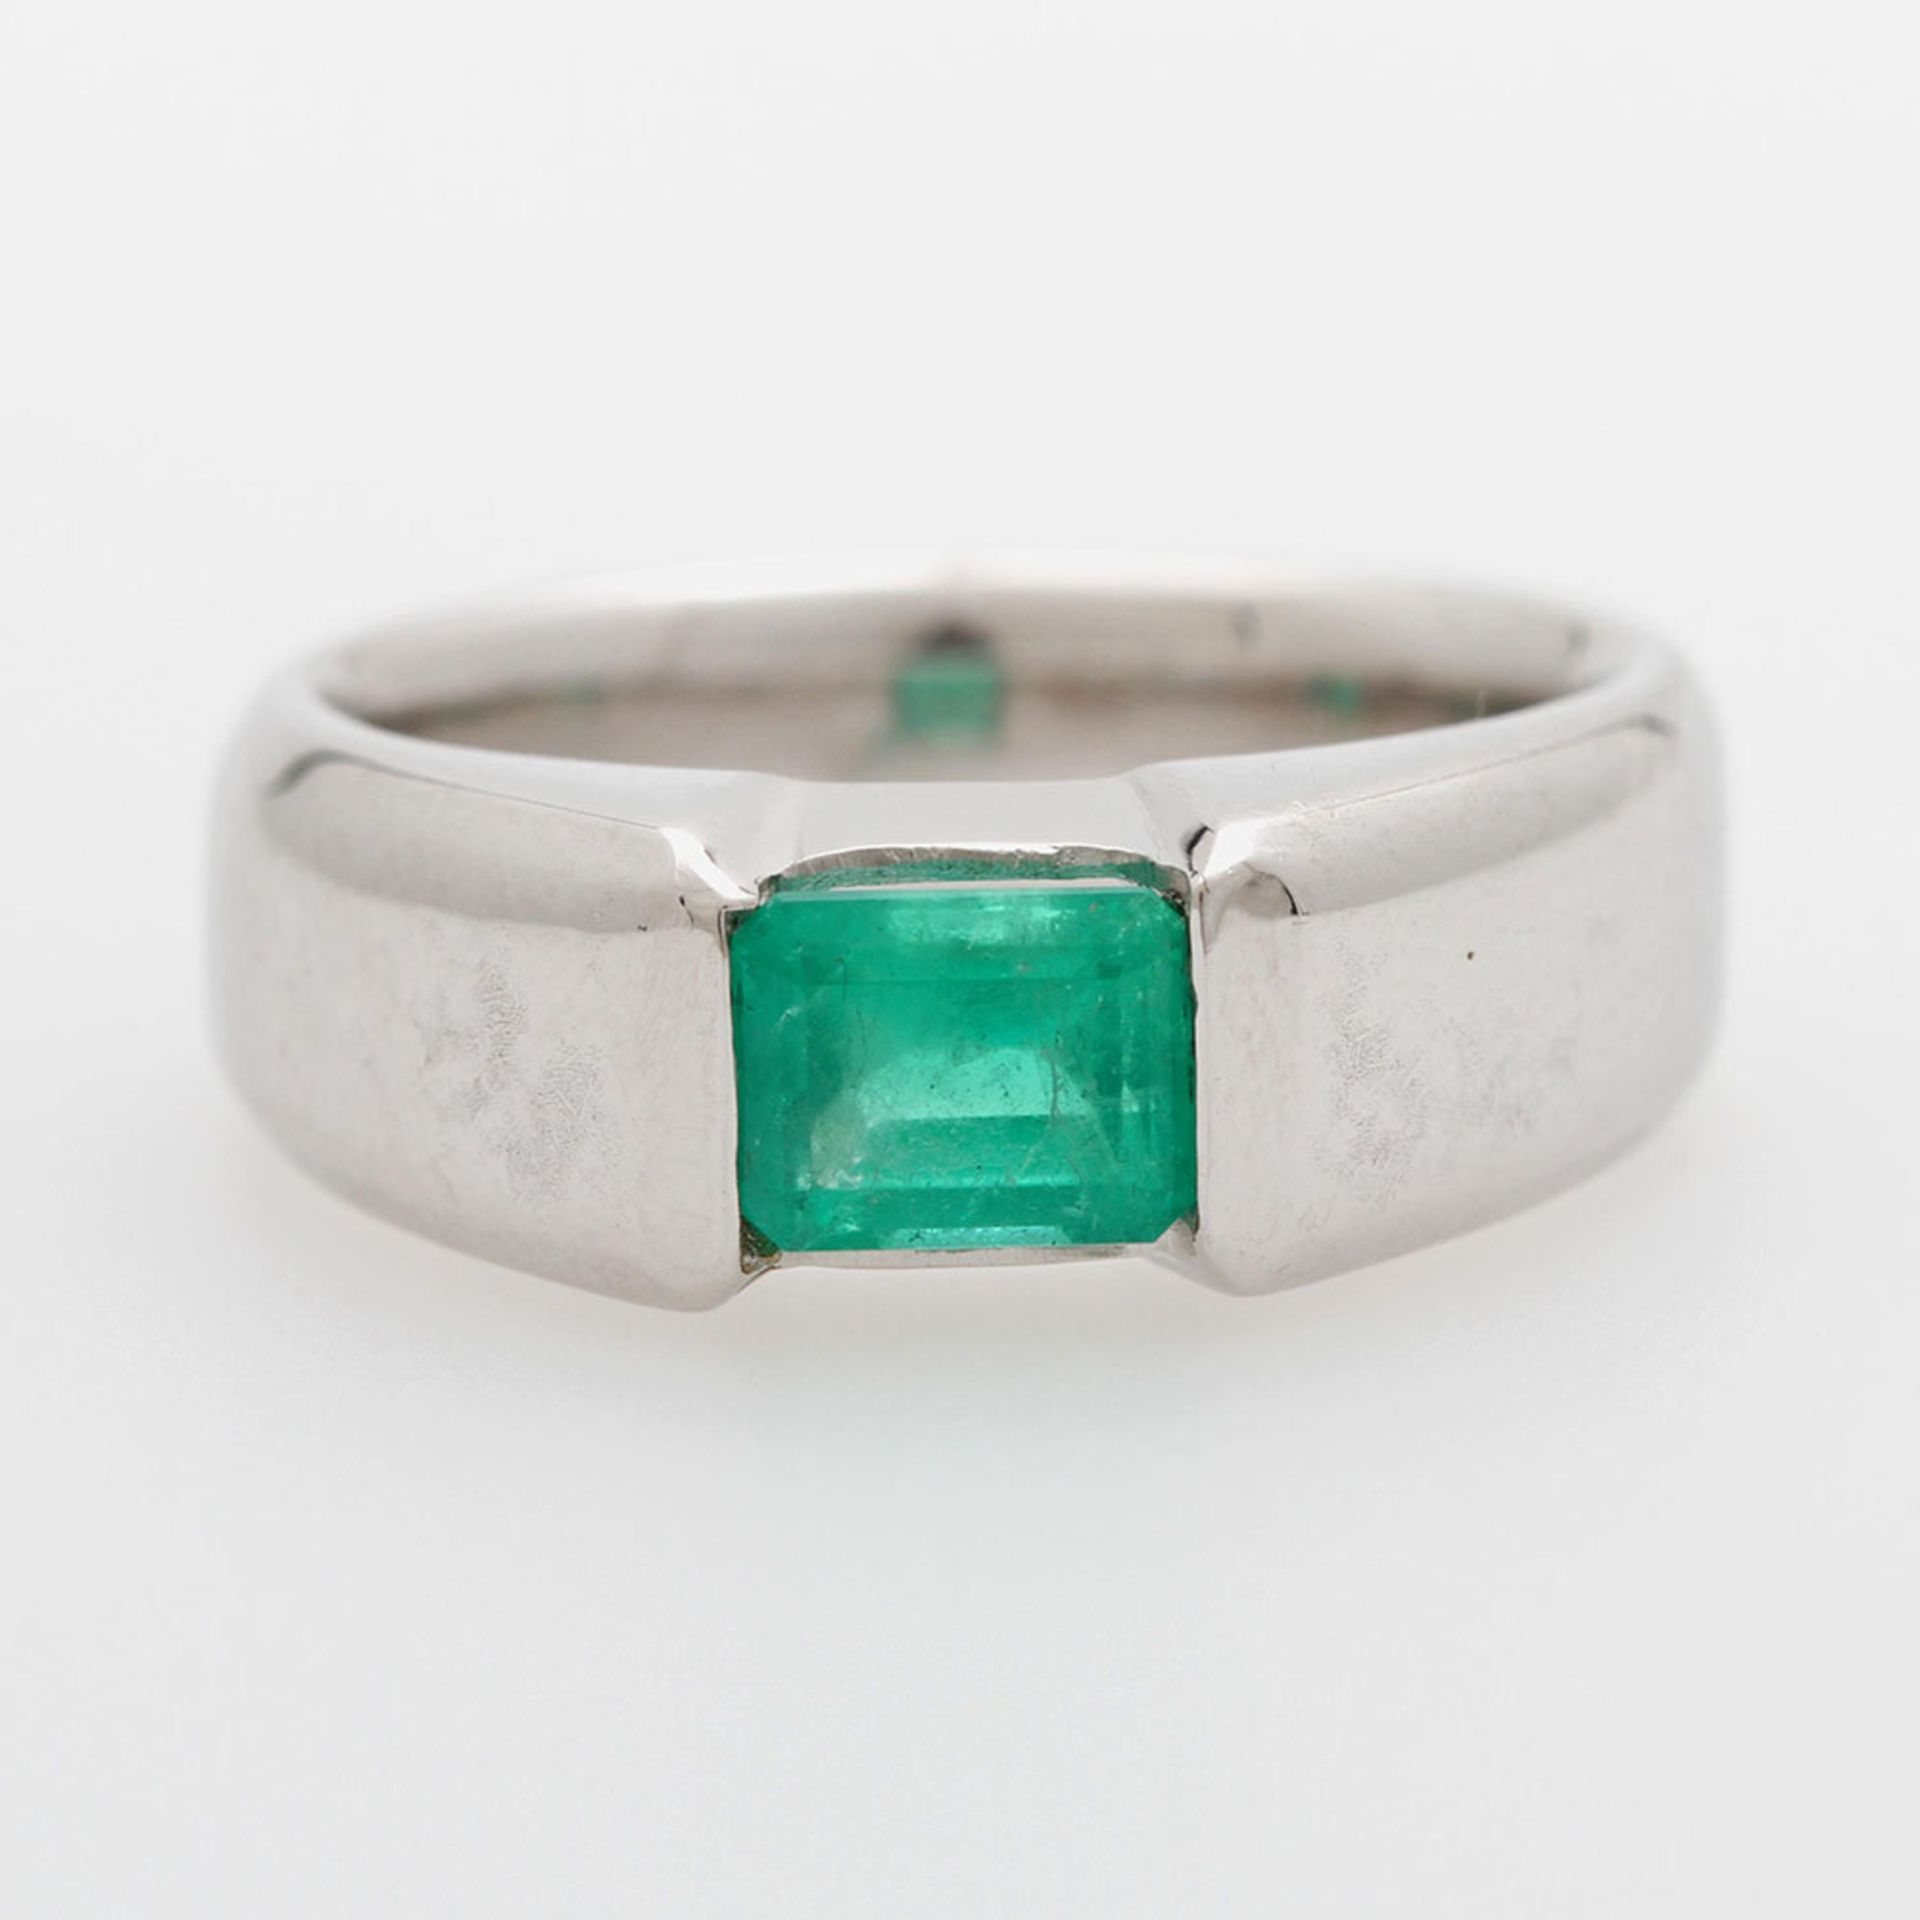 Damenring besetzt mit einem fac. Smaragd (ca. 4,5x5,5mm, gute Farbe u. Qualität). WG 18K. Ringgr.